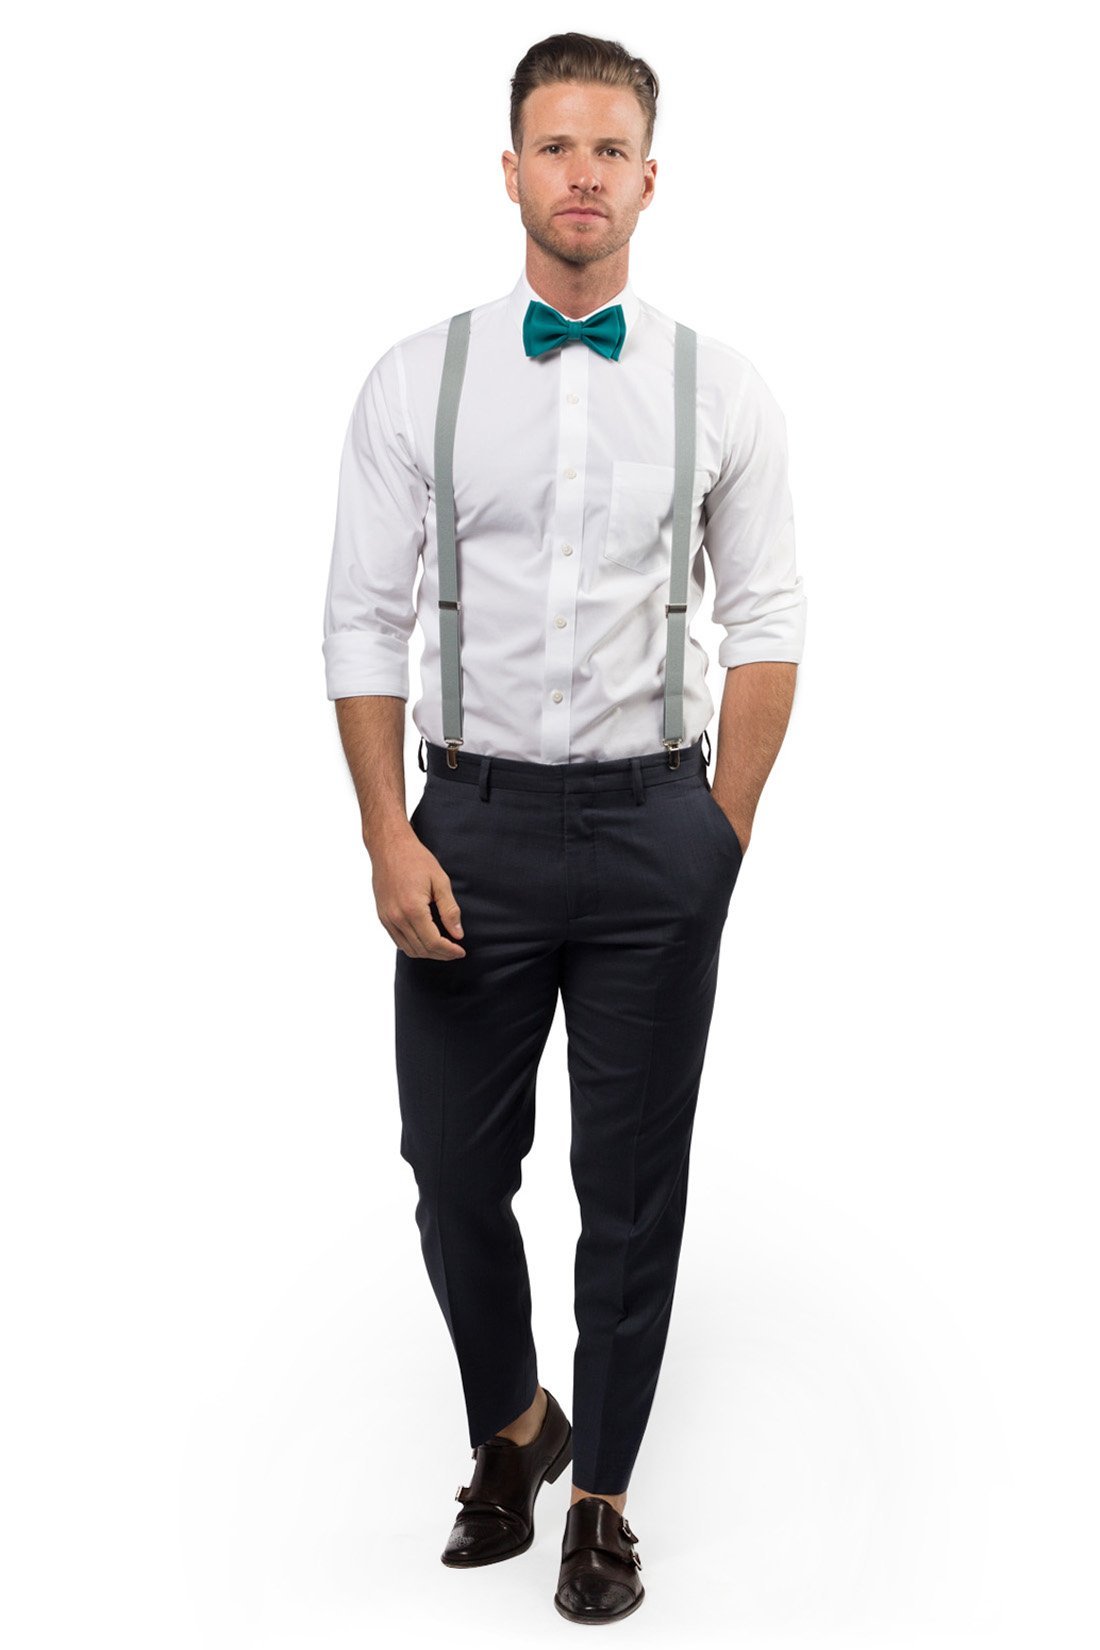 Light Grey Suspenders & Teal Bow Tie - Baby to Adult Sizes– Armoniia